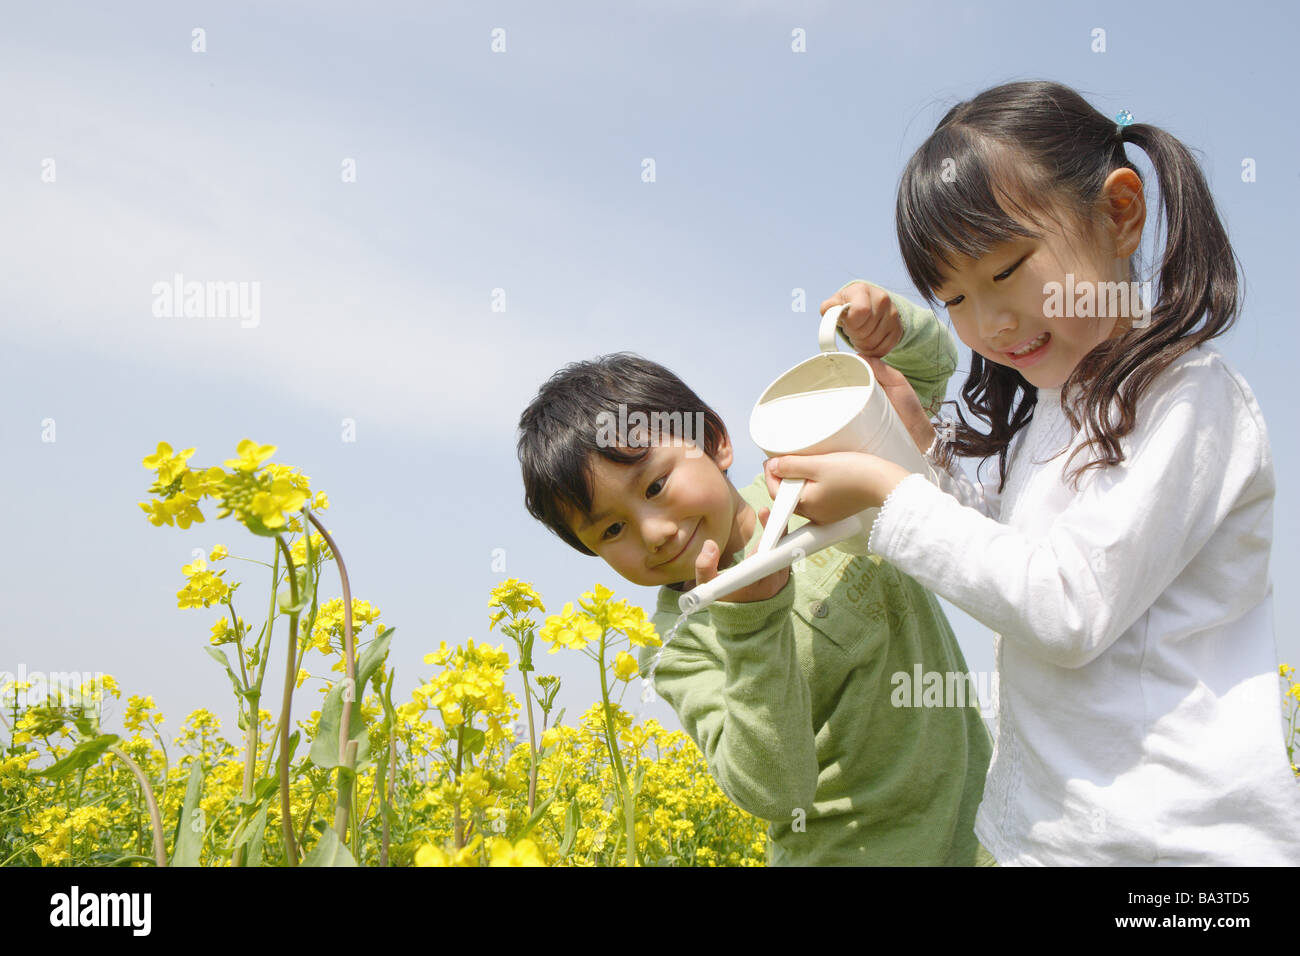 Kids watering the mustard field Stock Photo